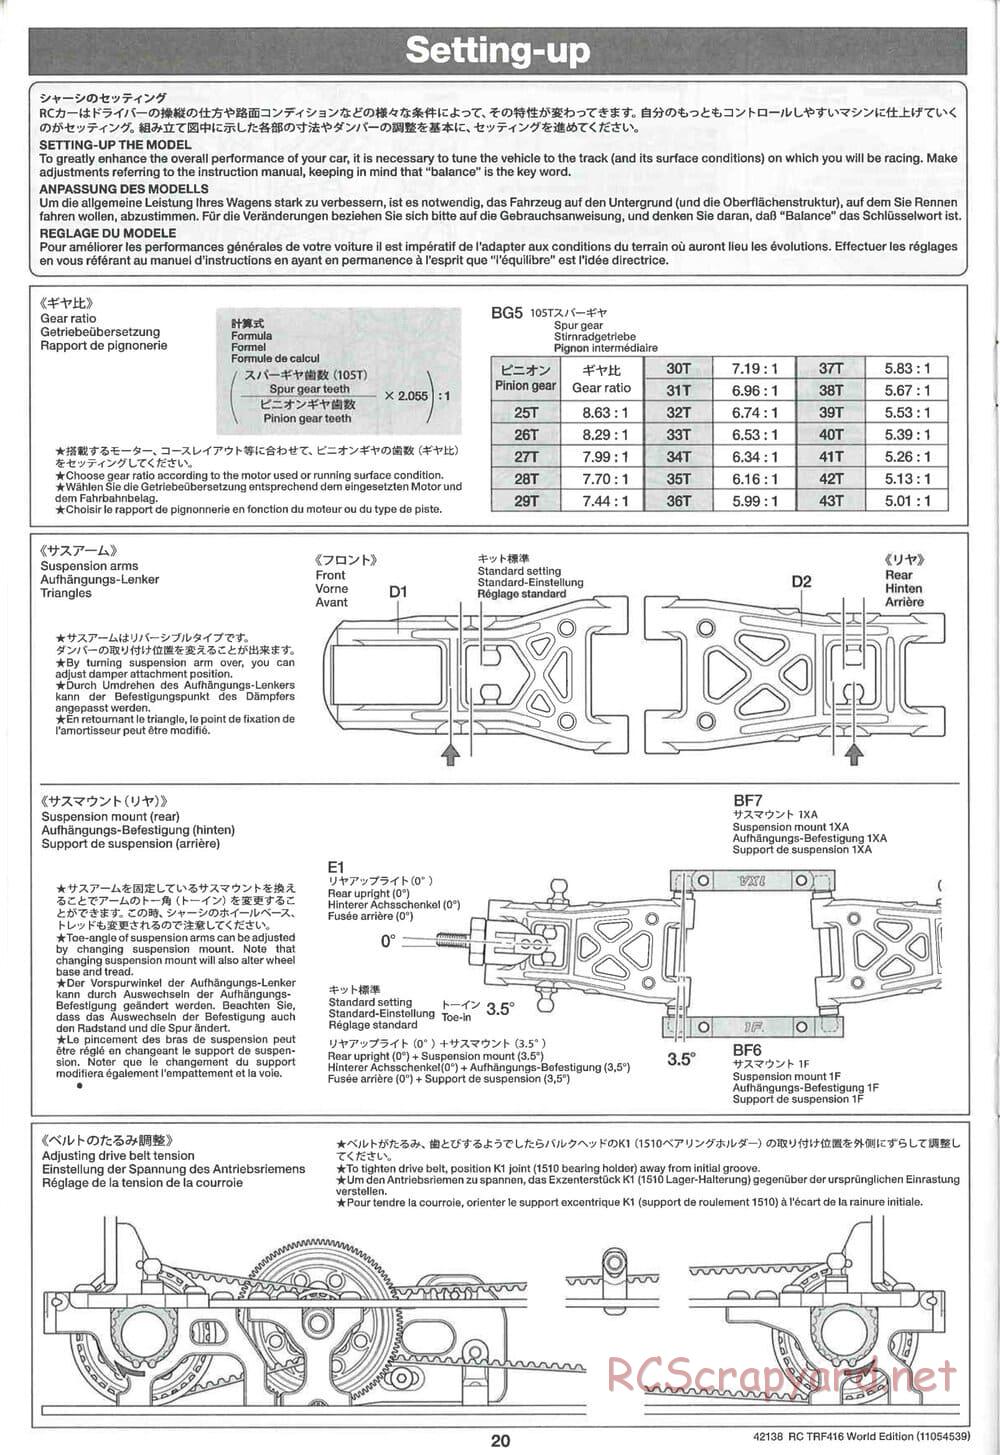 Tamiya - TRF416 World Edition Chassis - Manual - Page 20